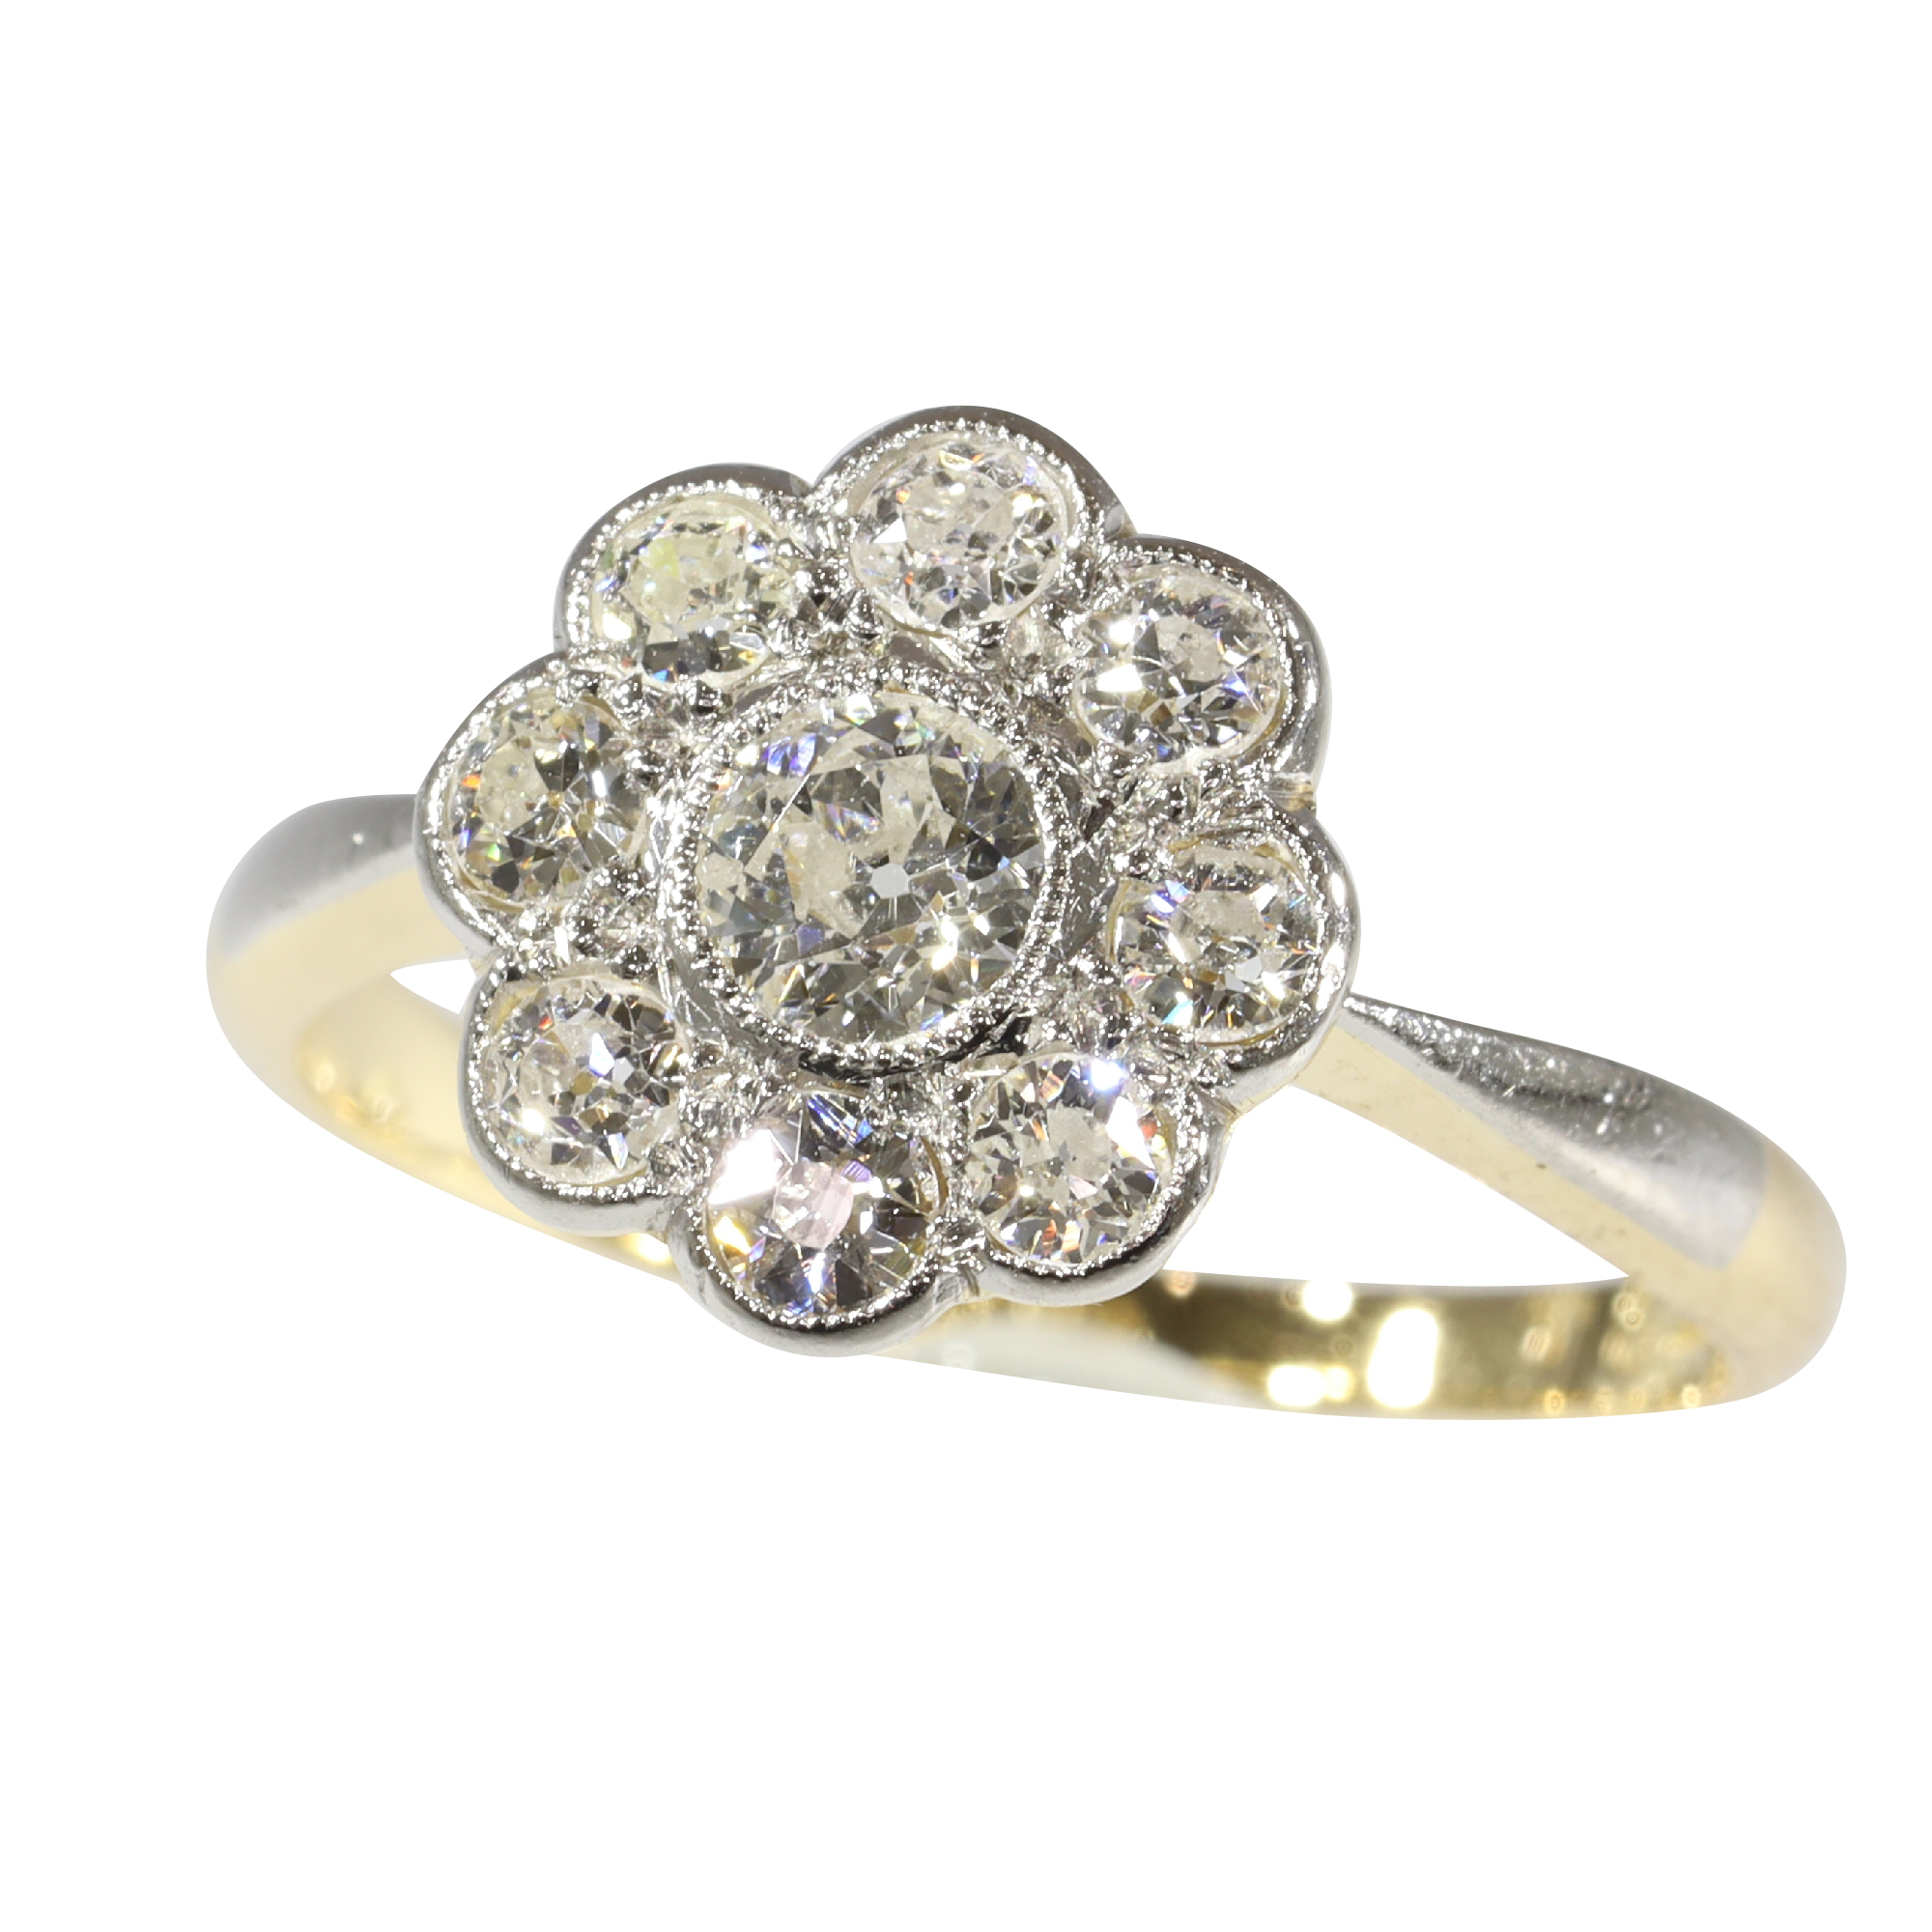 Vintage 1920 s Art Deco diamond cluster ring